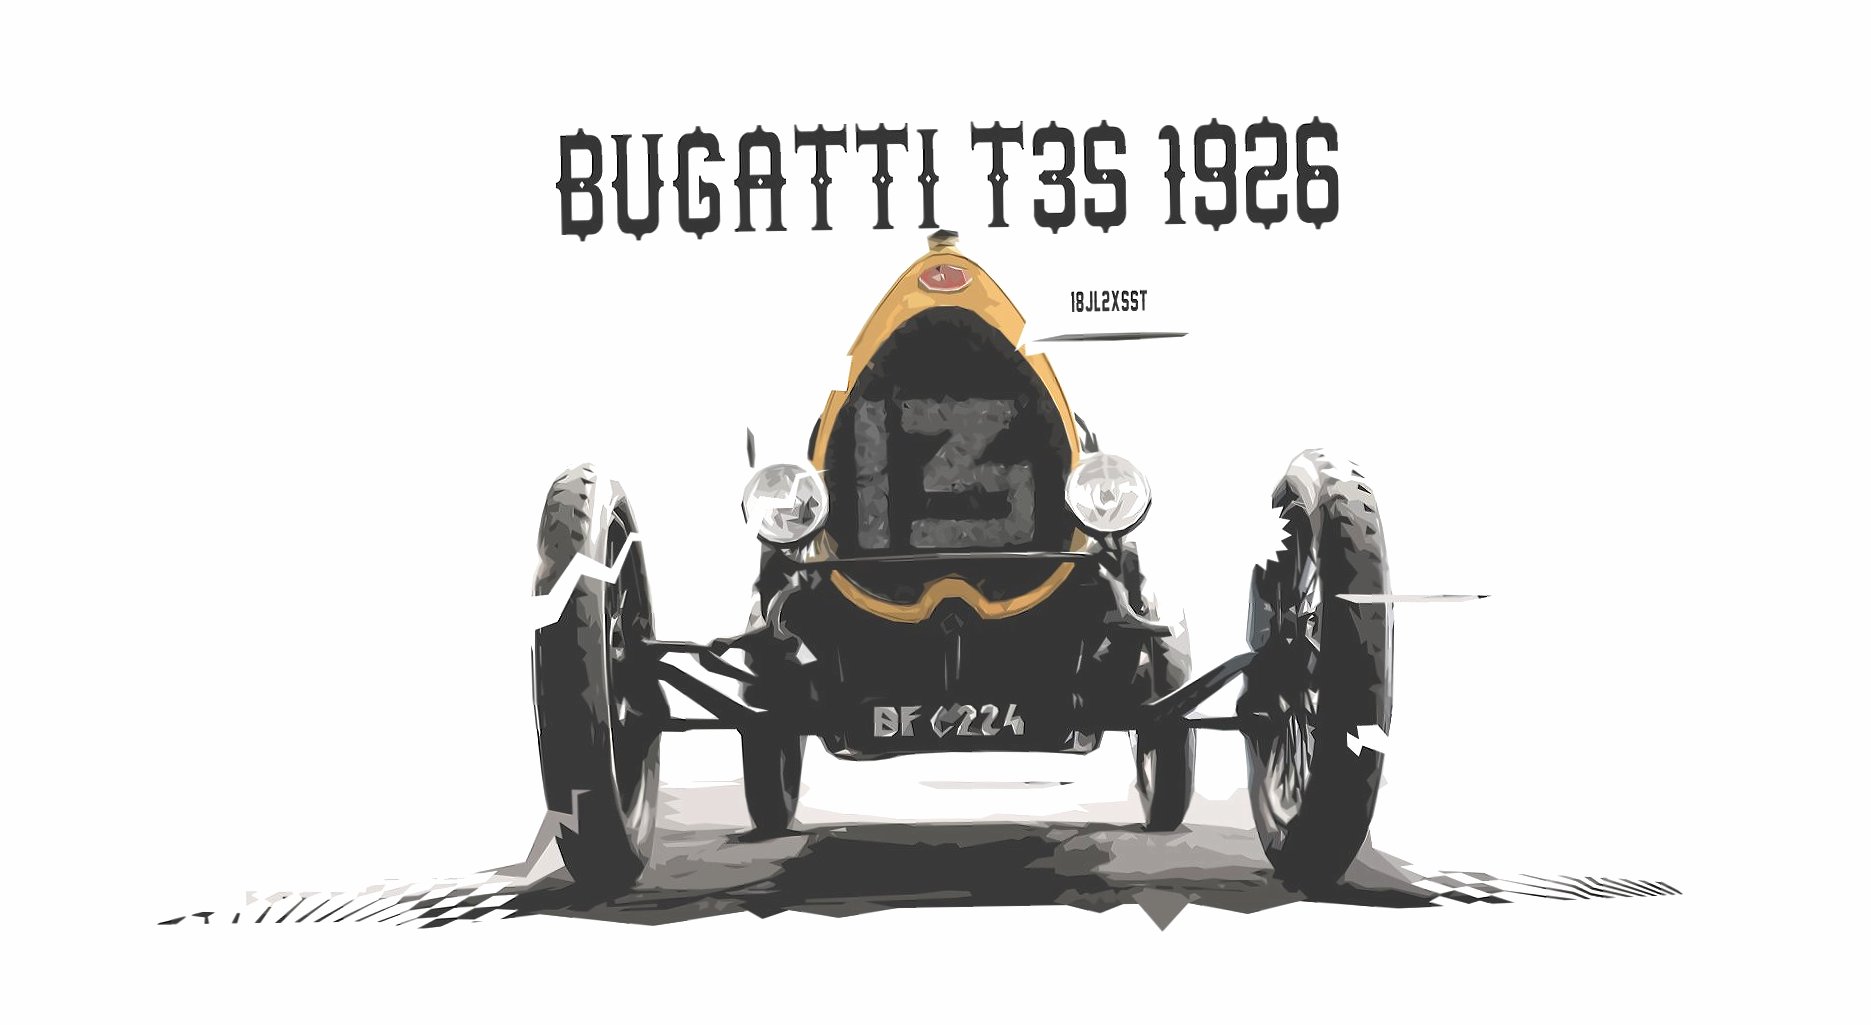 Bugatti Type 35 at 1280 x 960 size wallpapers HD quality